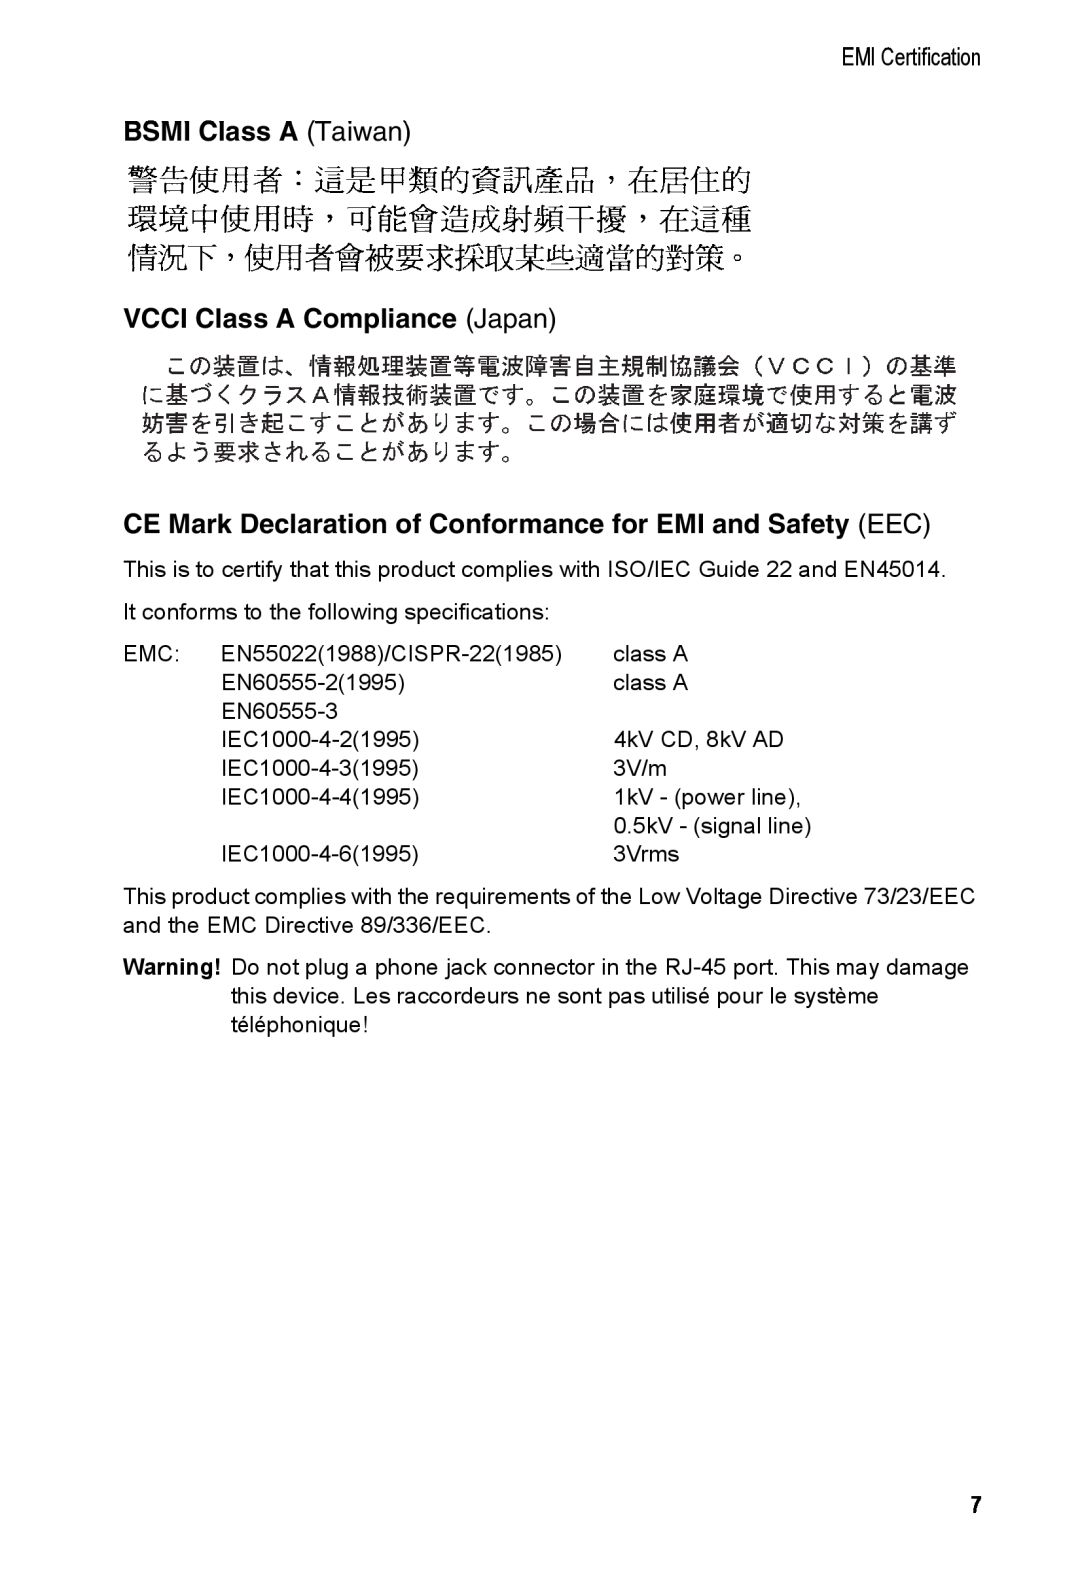 Accton Technology EM4601-SX-SC, E062000-R01 manual BSMI Class A Taiwan VCCI Class A Compliance Japan, EMI Certification 